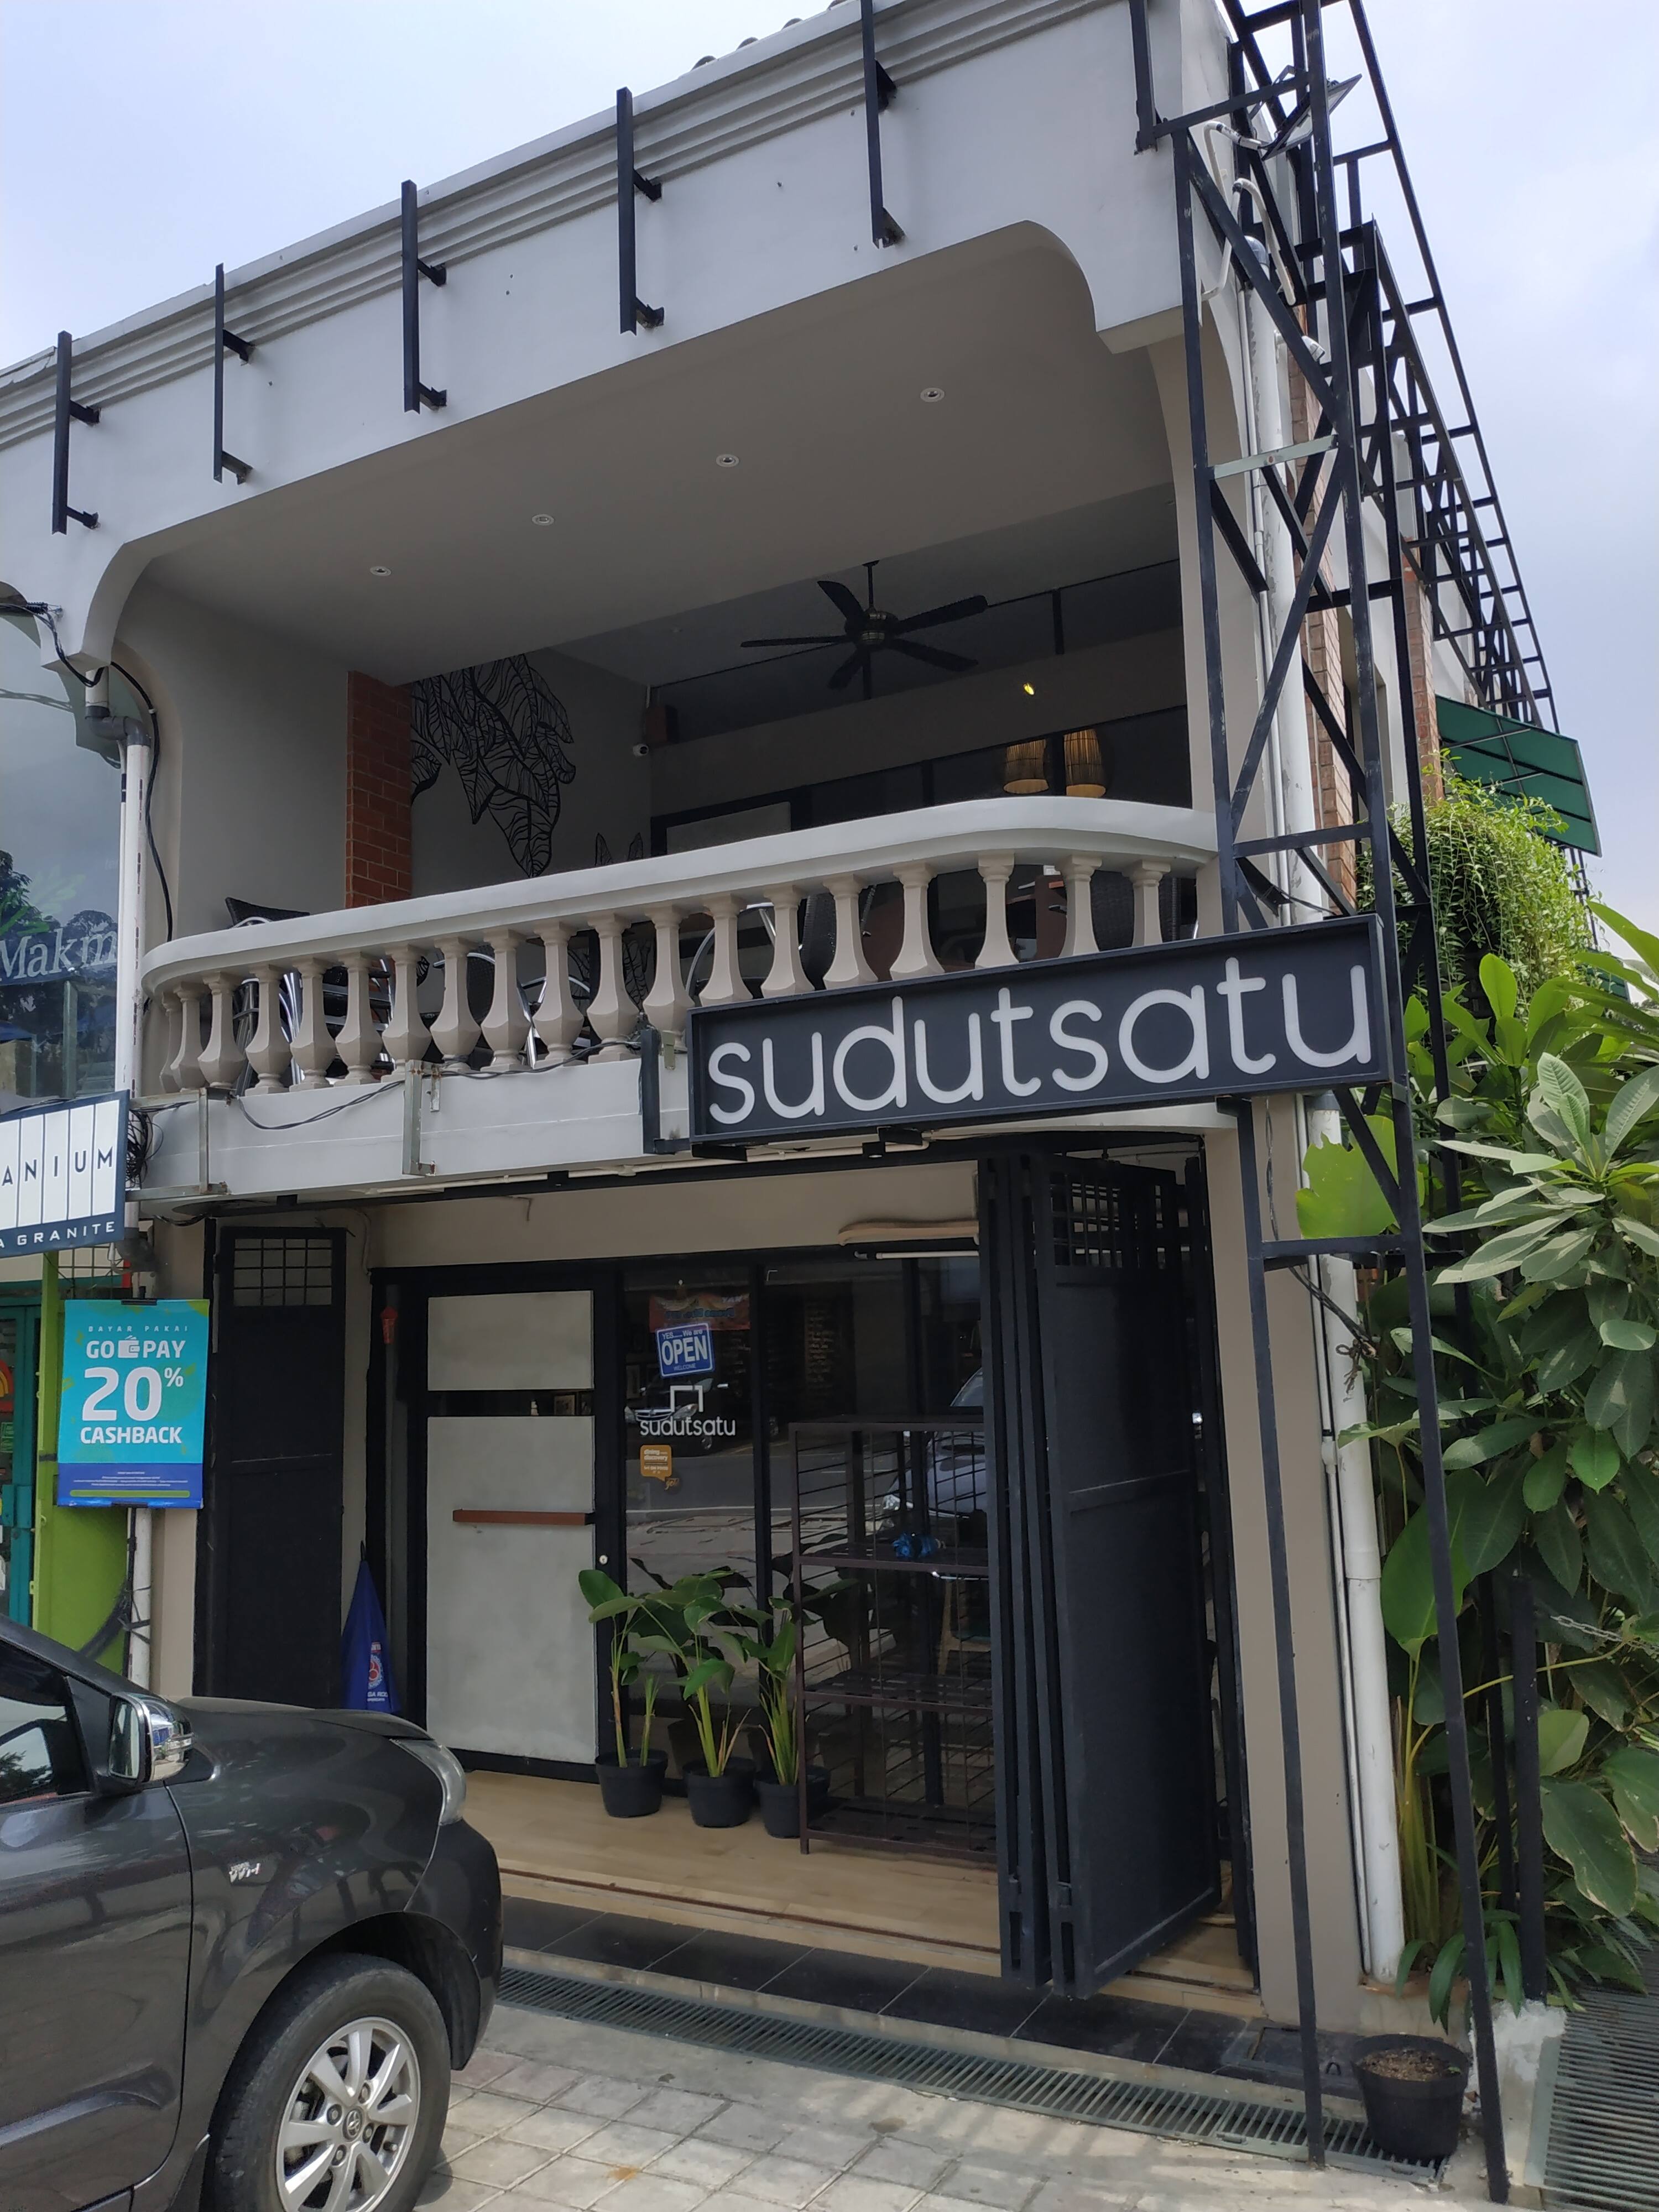 5 Rekomendasi Cafe di Jakarta Barat